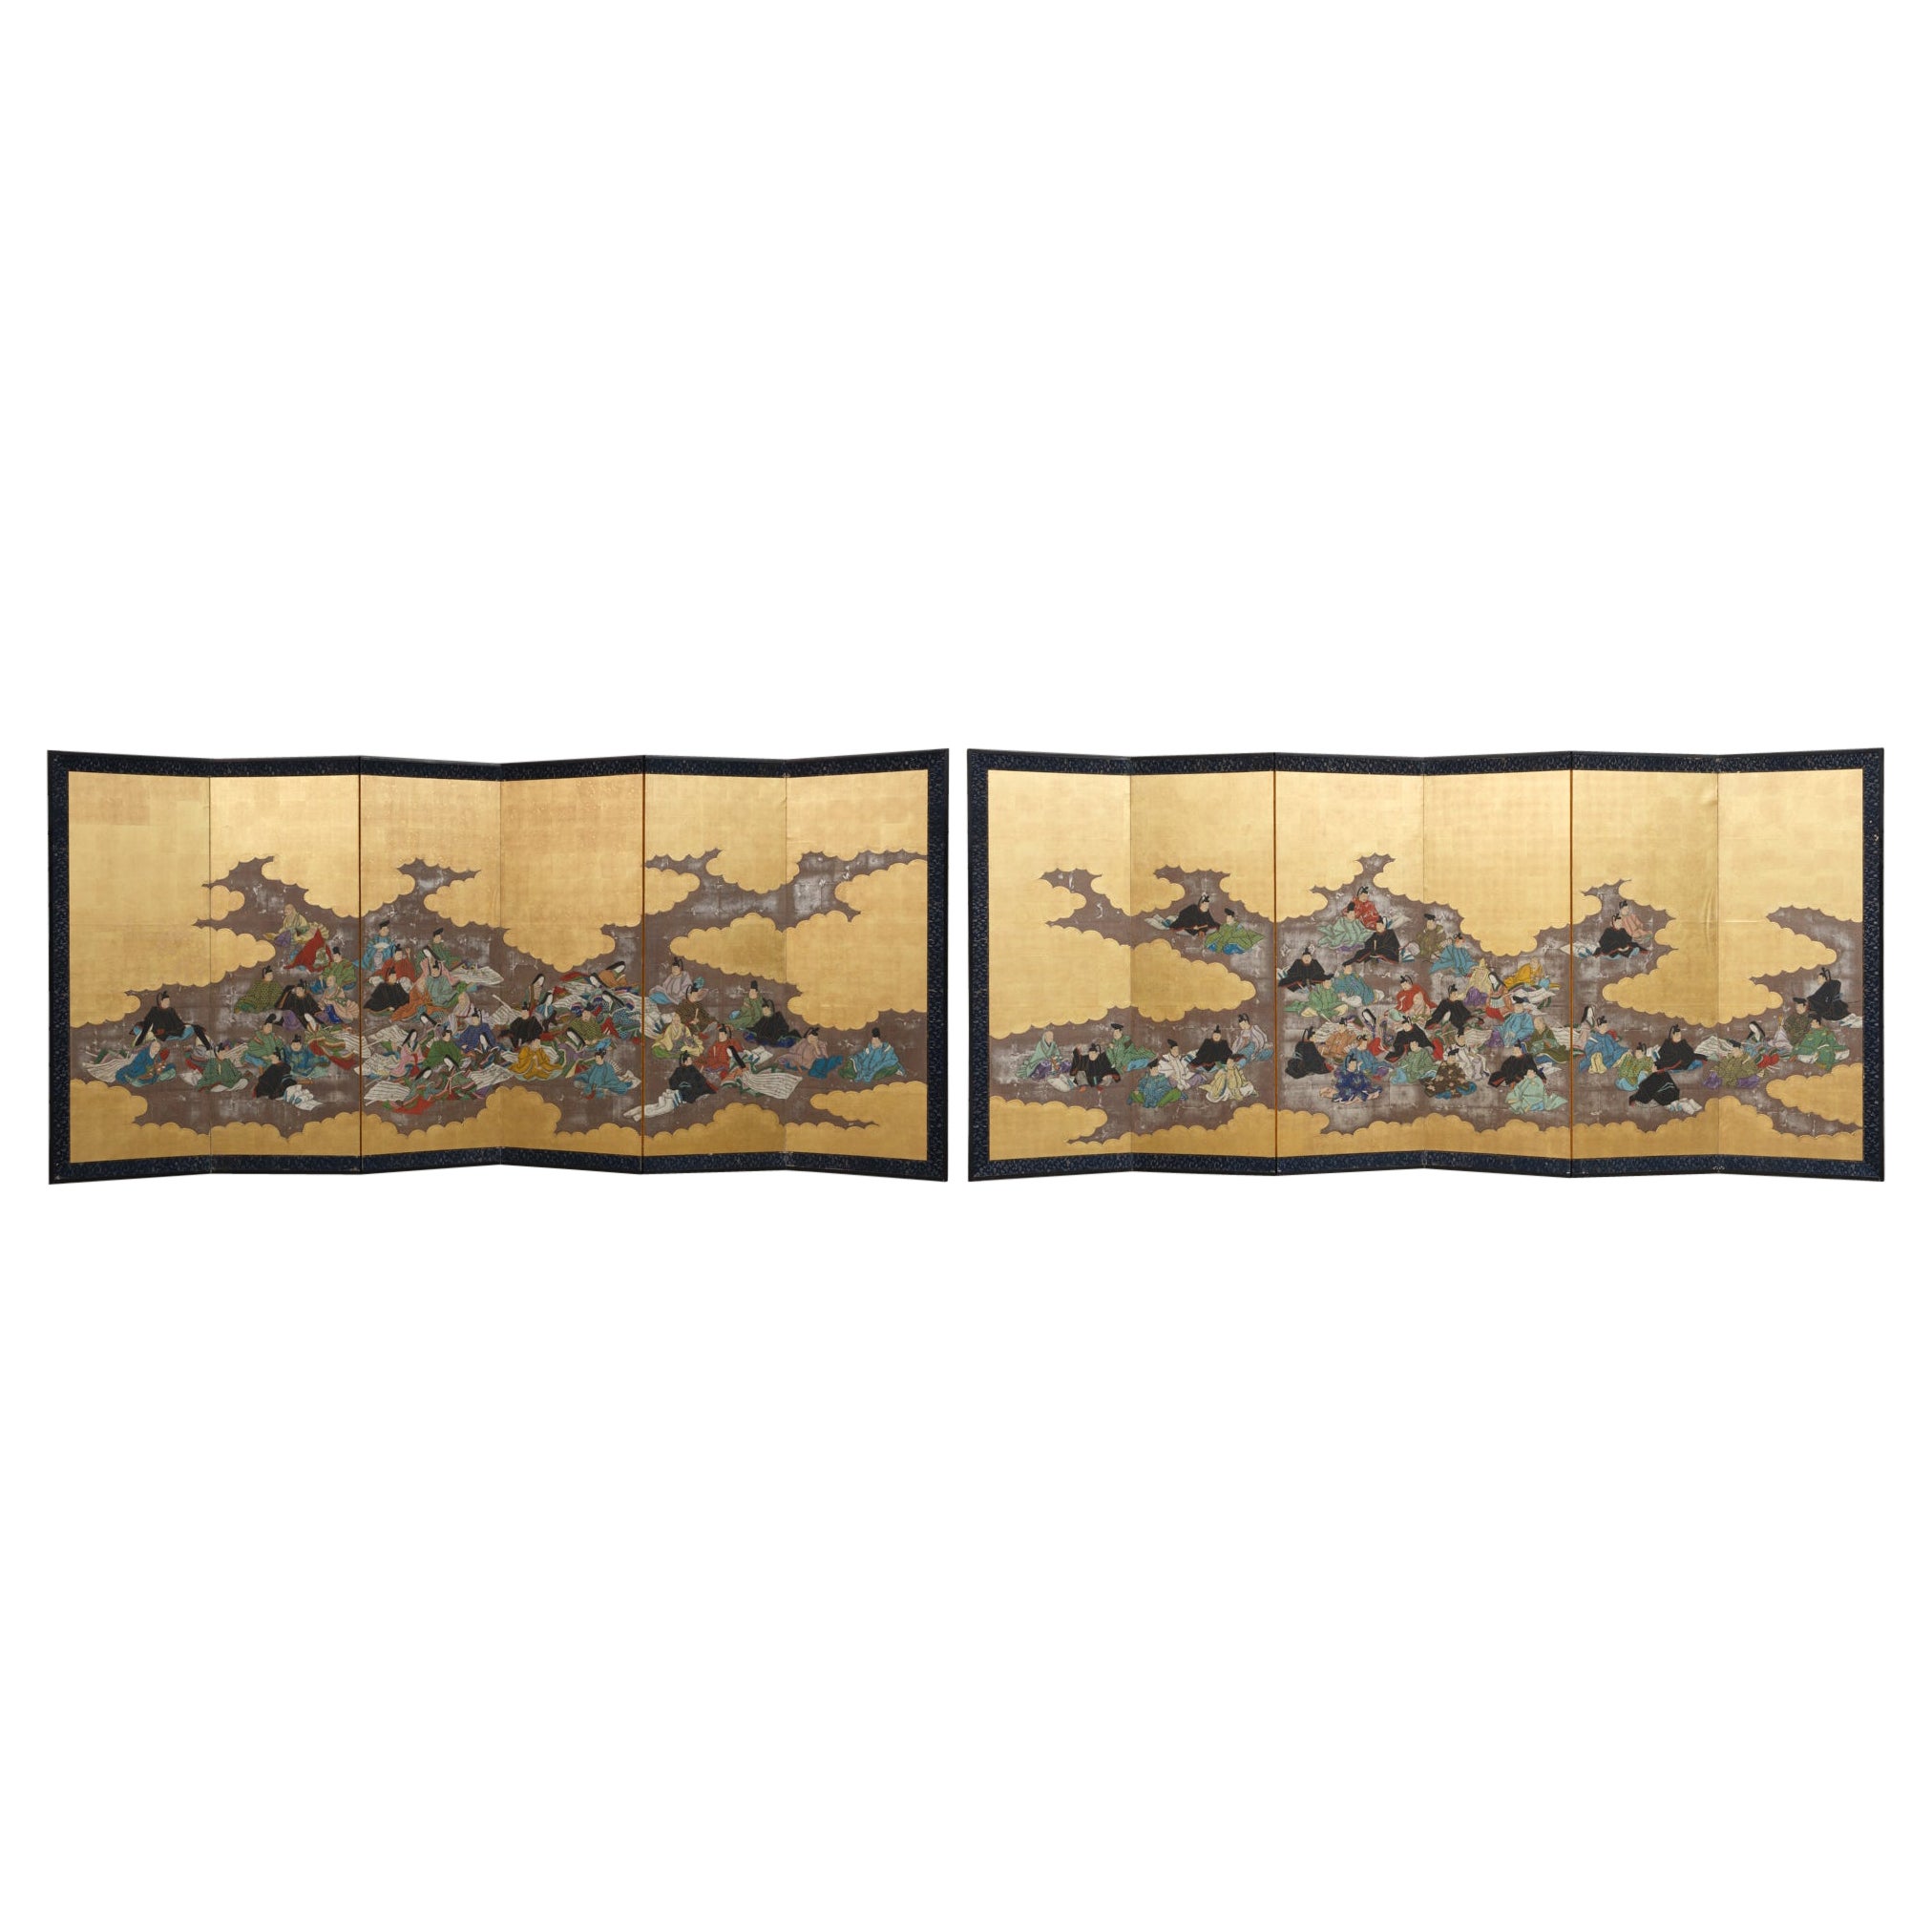 Pair of Japanese folding screens (byôbu) of poets from ‘Hyakunin isshu’ 百人一首